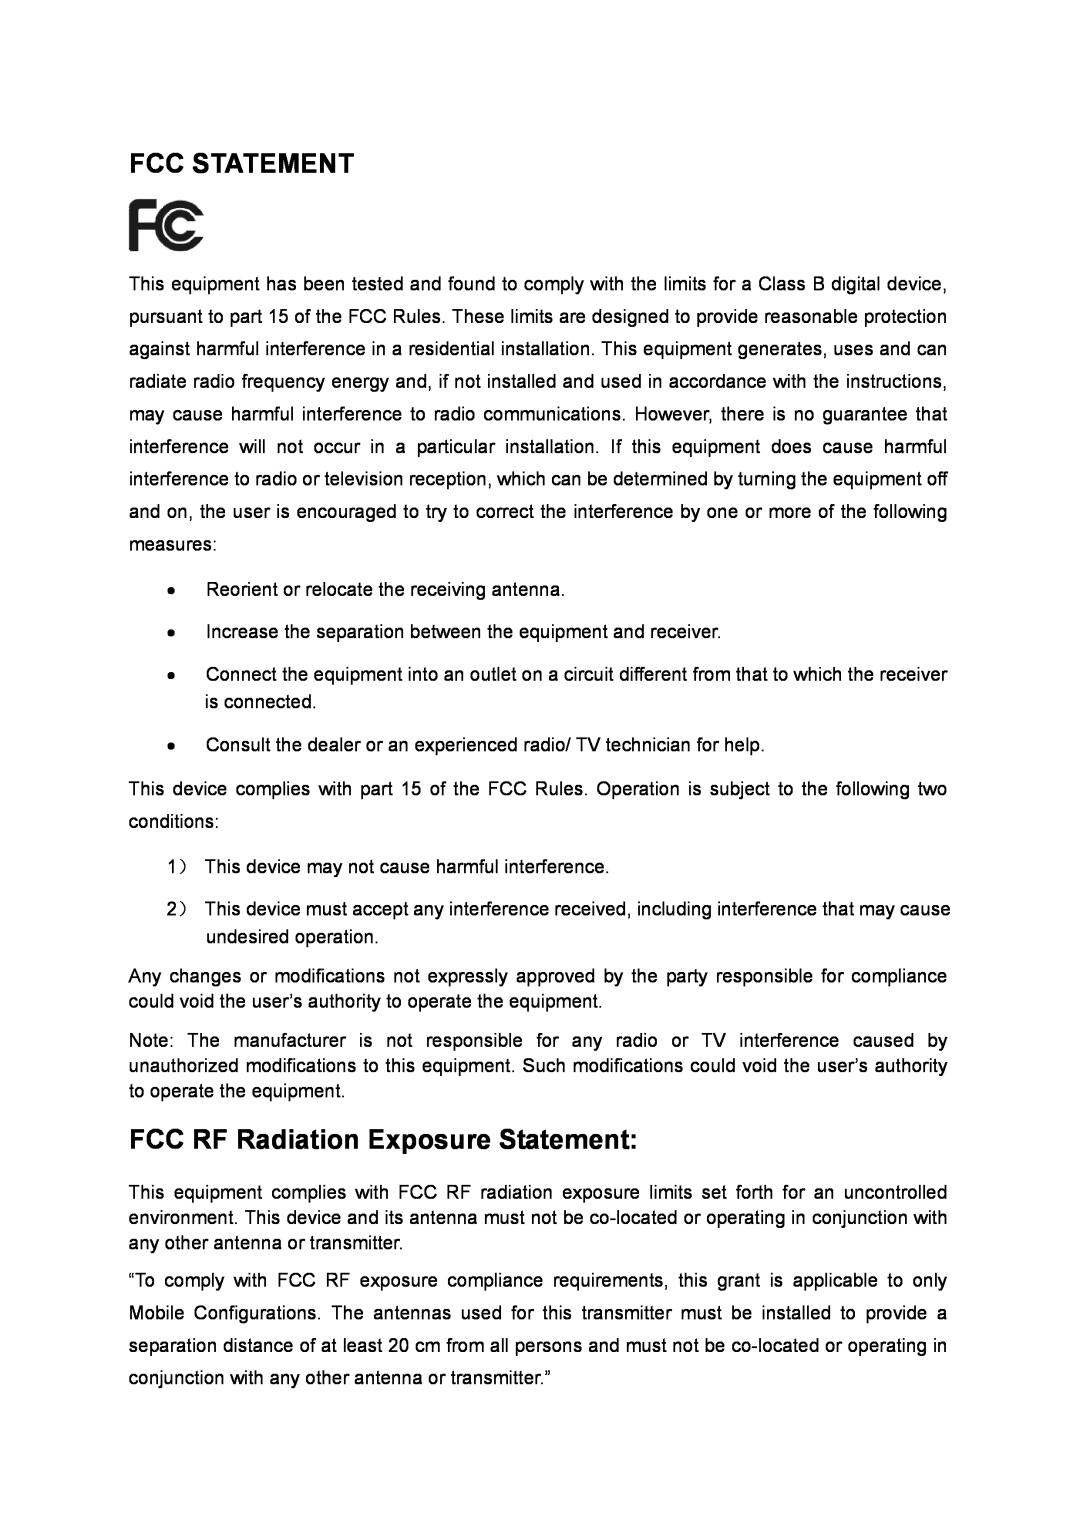 TP-Link TL-WDR3600 manual Fcc Statement, FCC RF Radiation Exposure Statement 